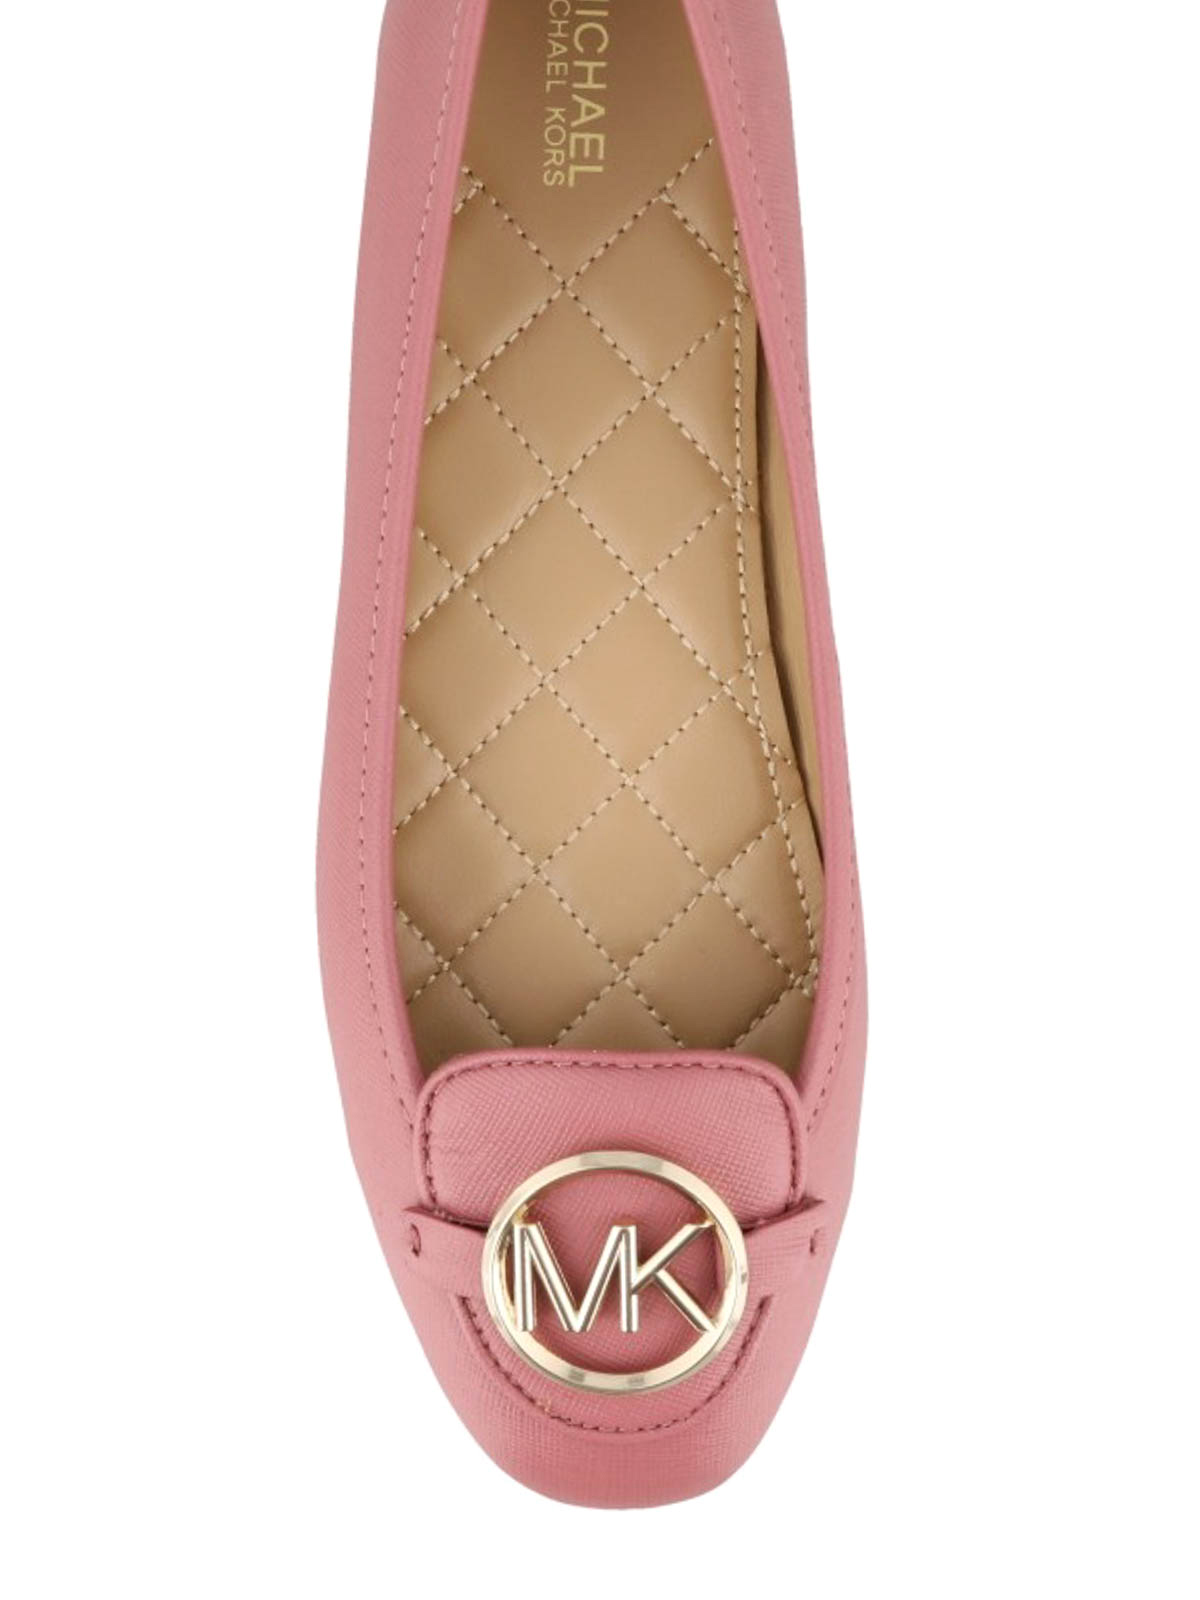 Michael Kors Lillie pink leather flats flat shoes